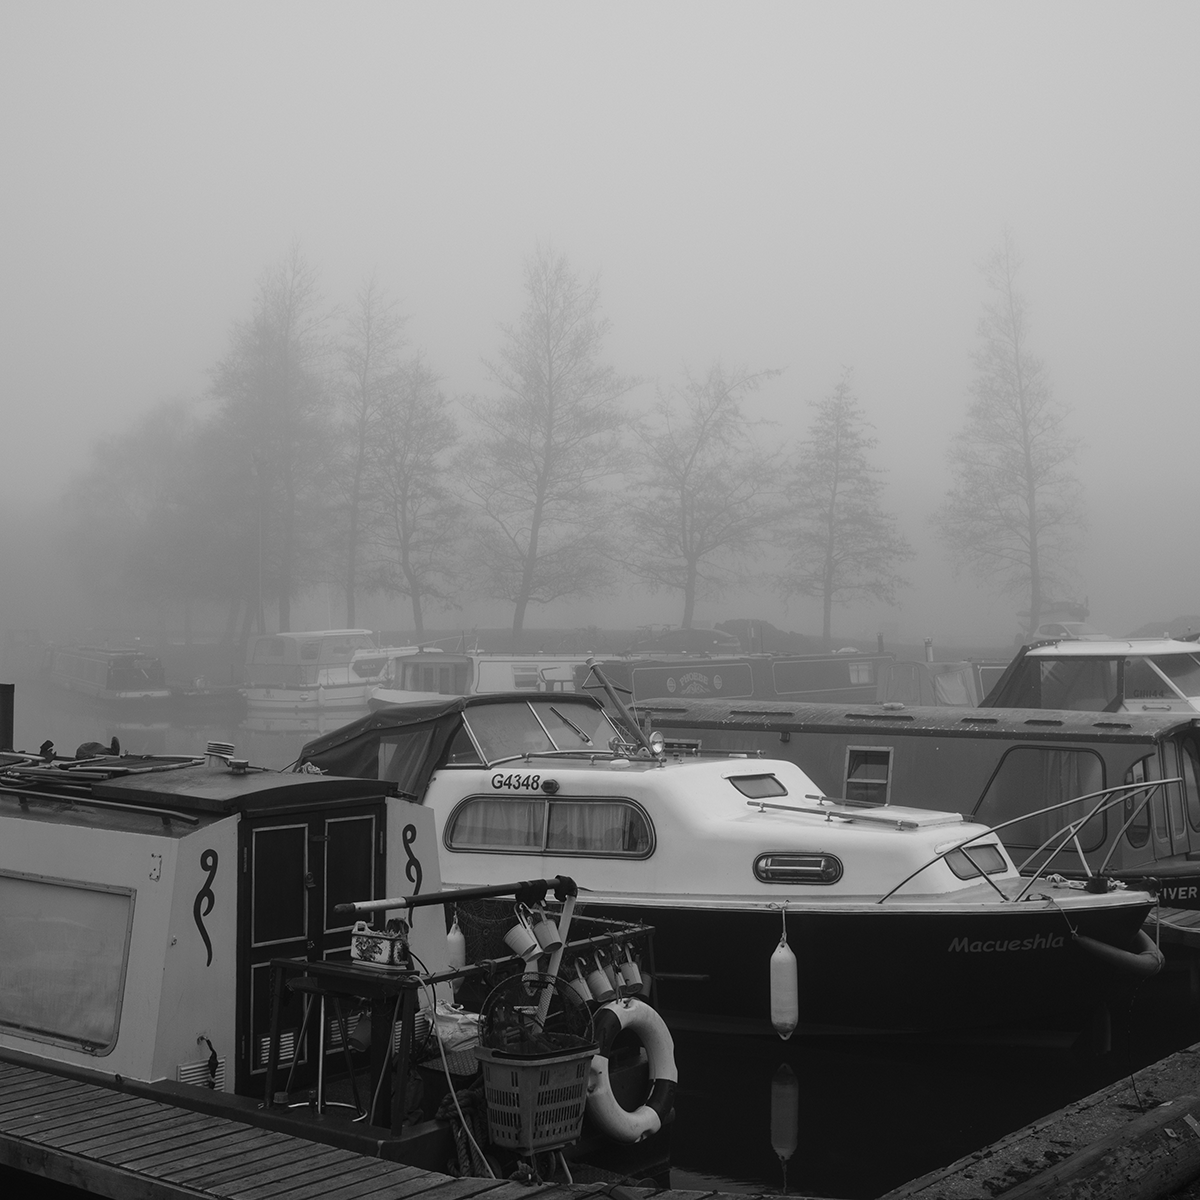 Marina Boats in the Mist II link image